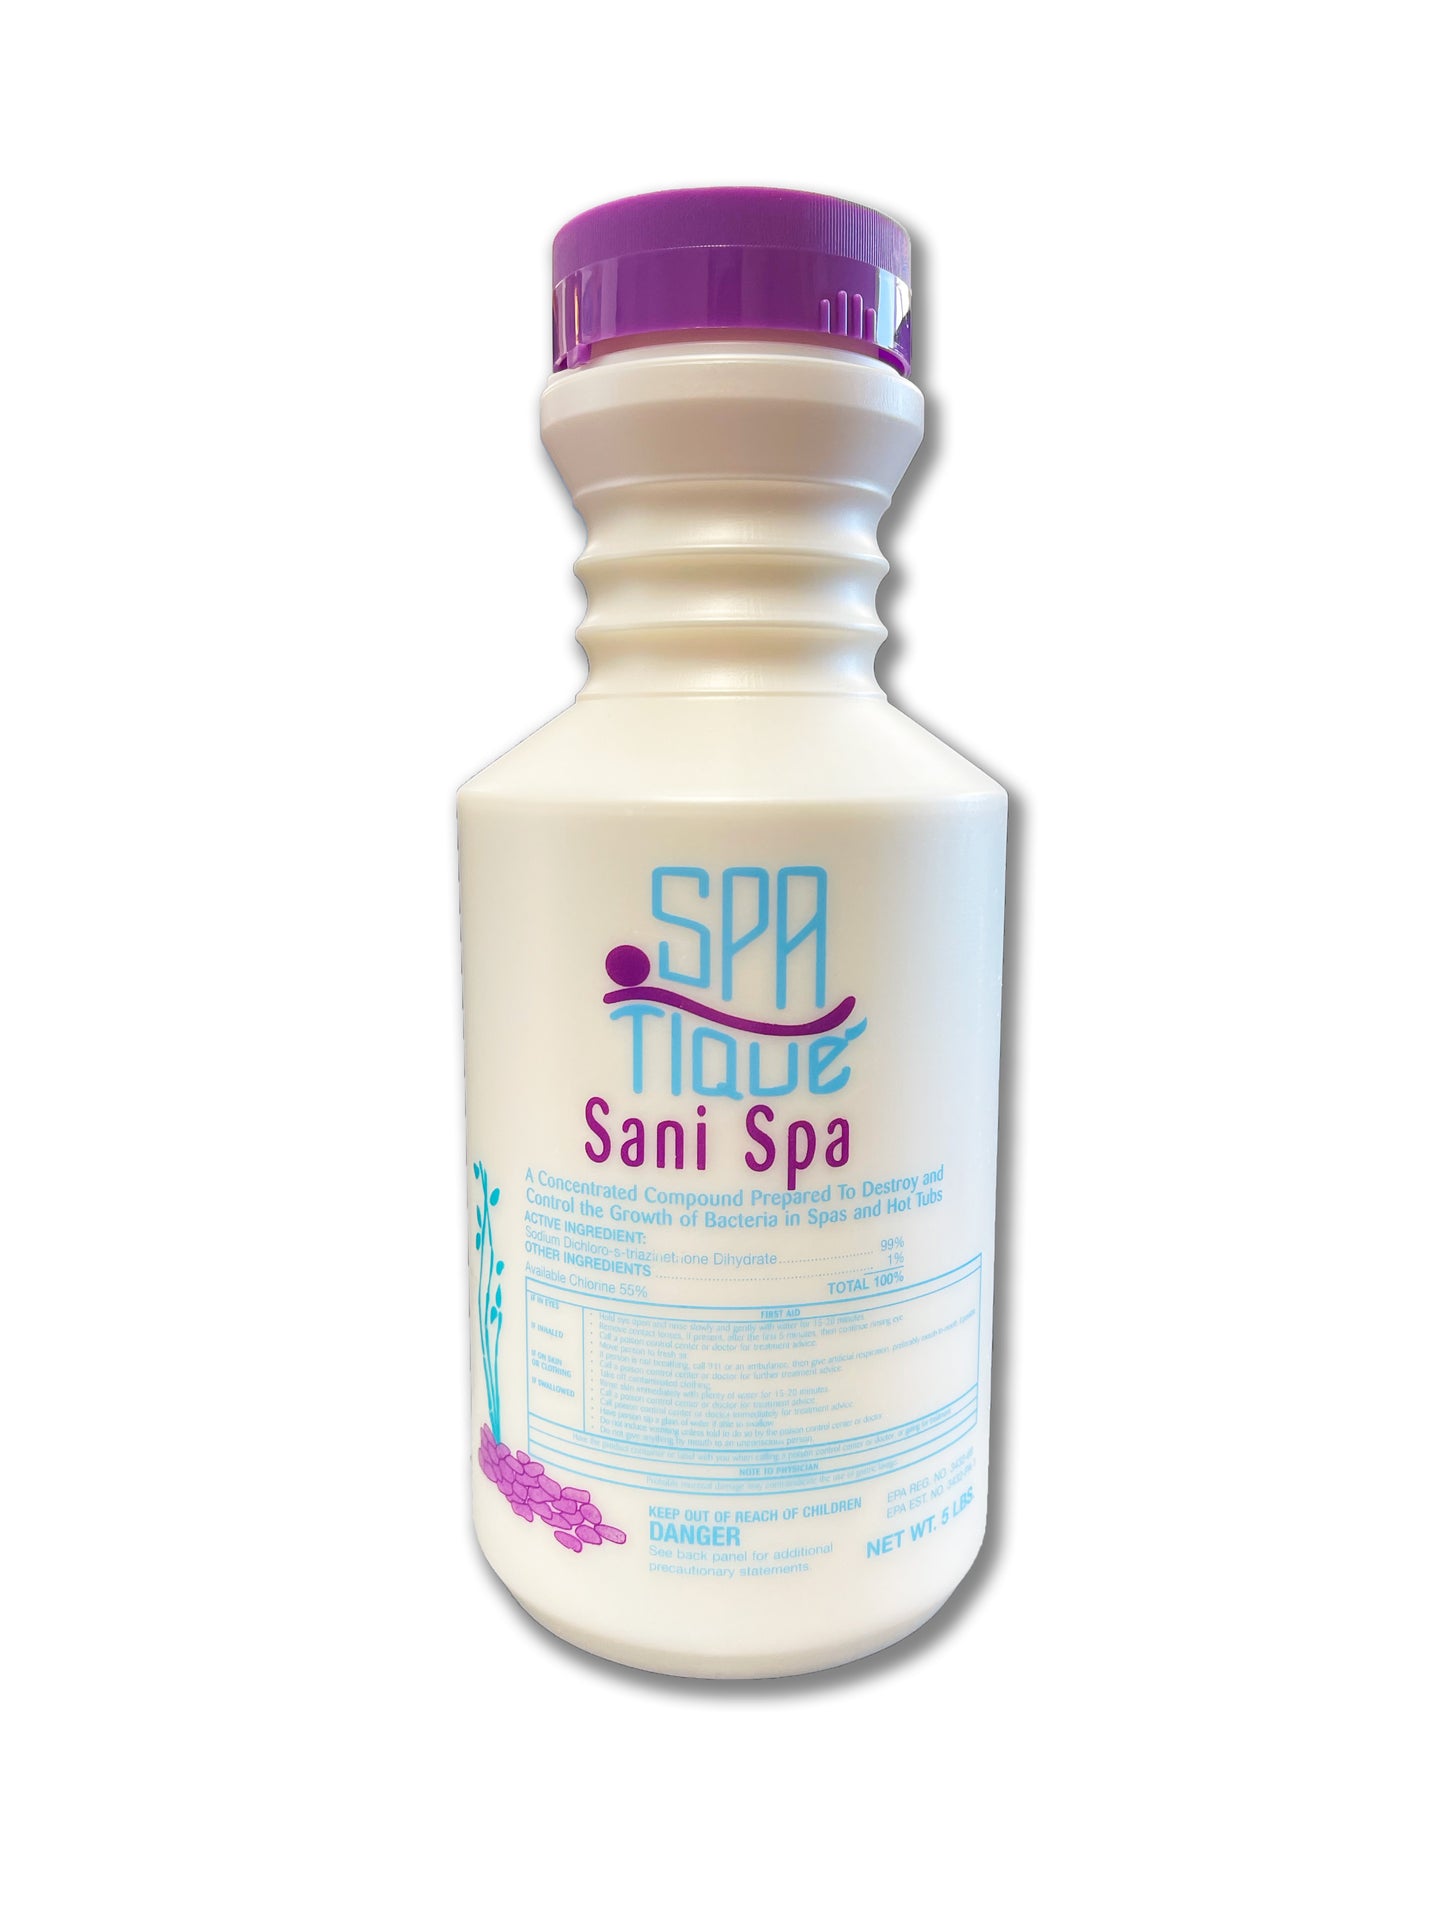 SpaTique Sani Spa Dichlor Chlorine Granules